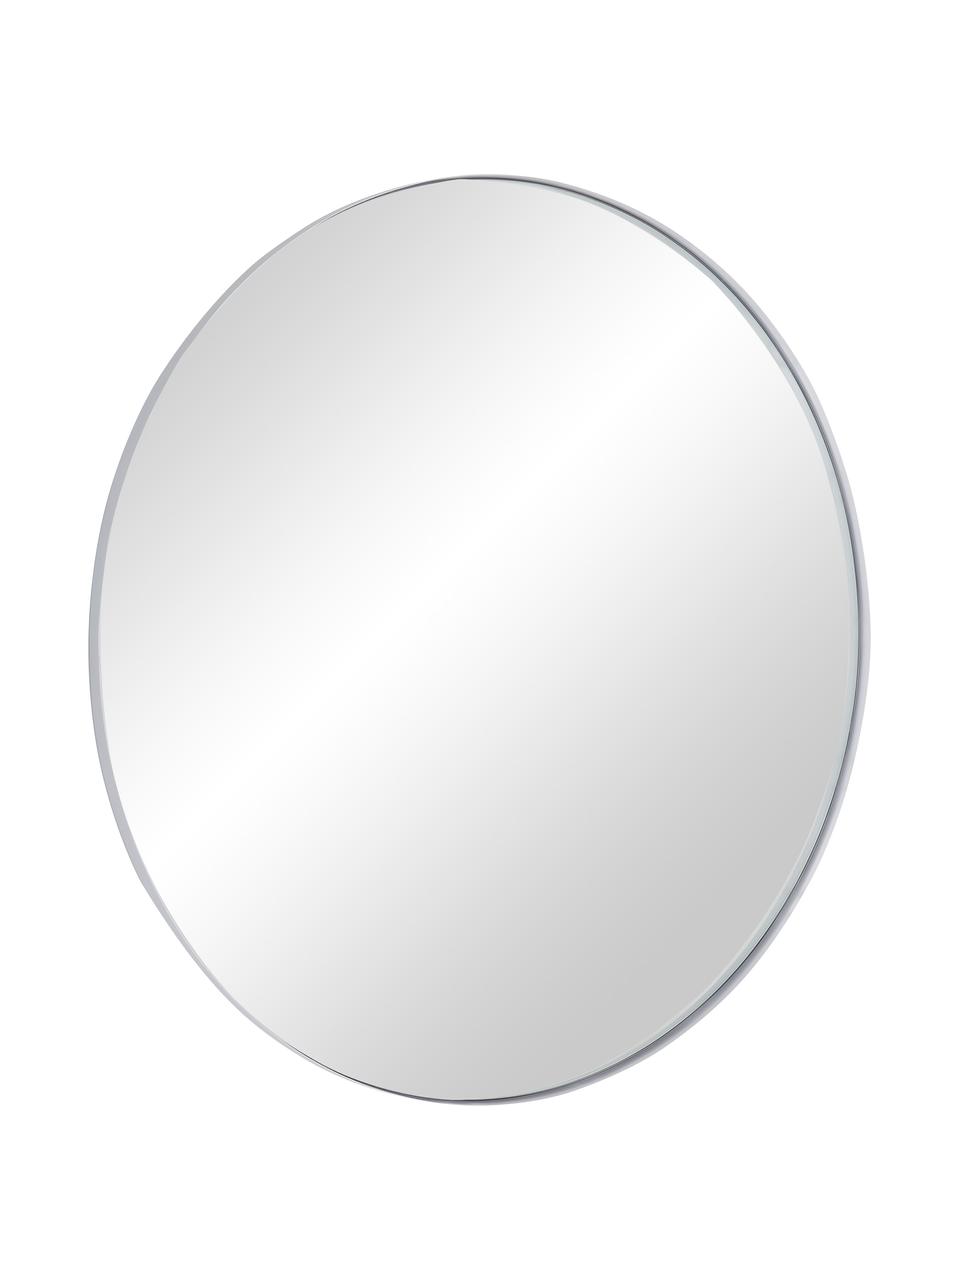 Kulaté nástěnné zrcadlo Ivy, Bílá